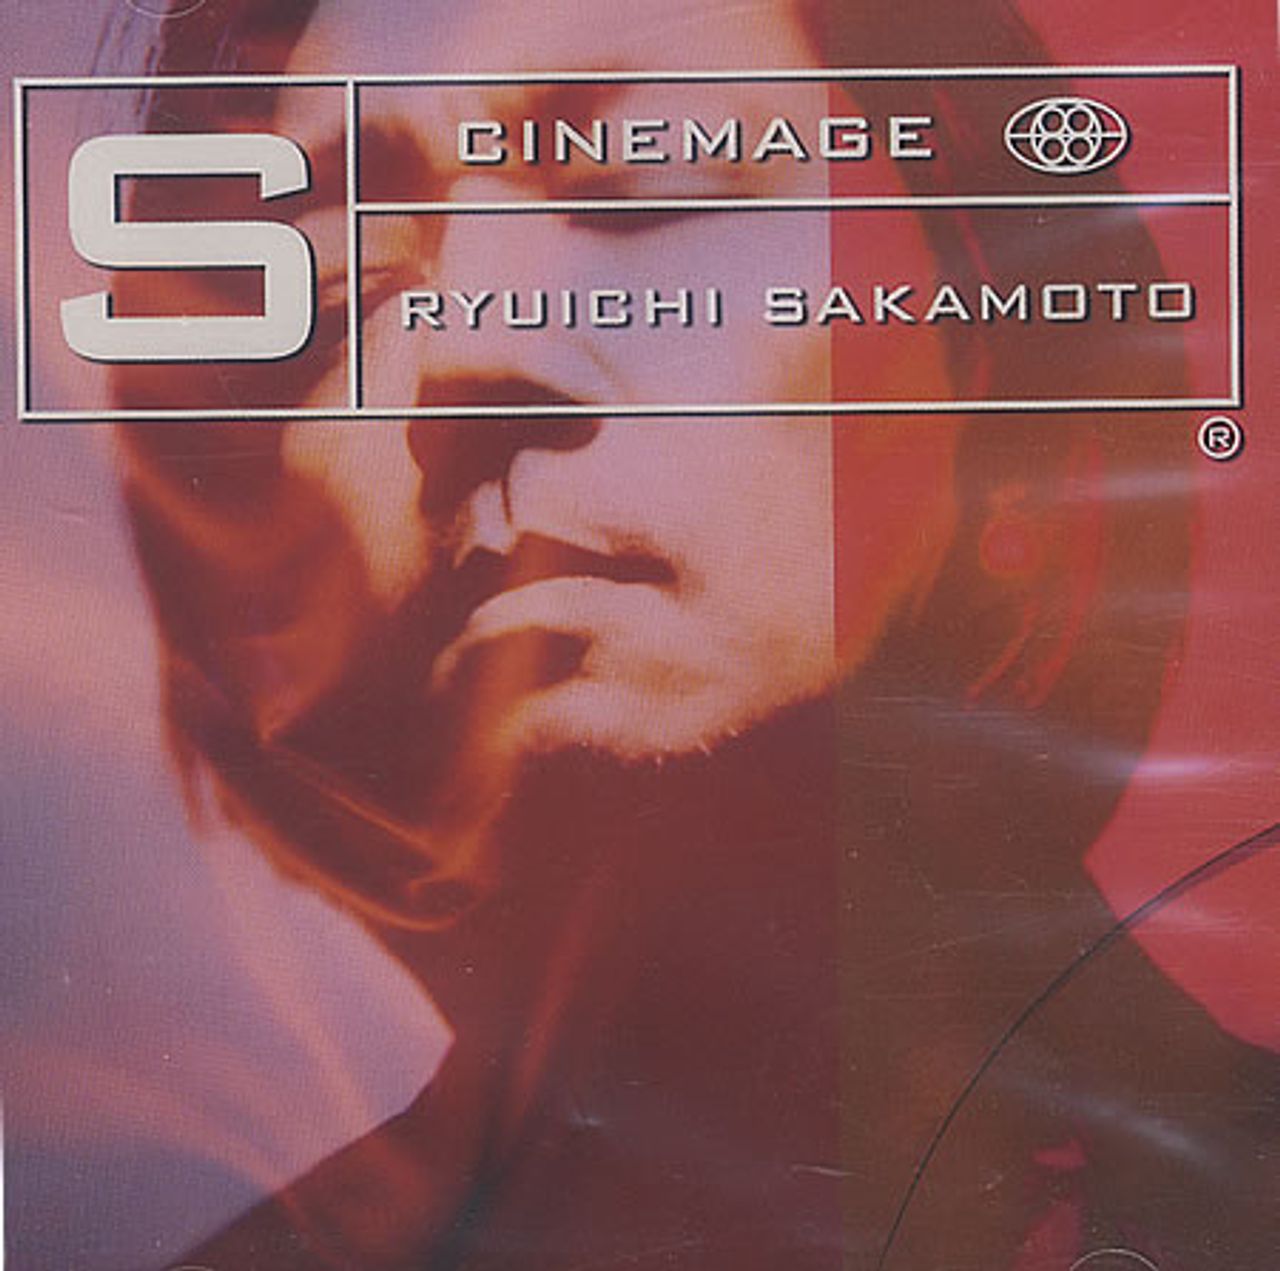 Ryuichi Sakamoto Cinemage US Promo CD album — RareVinyl.com